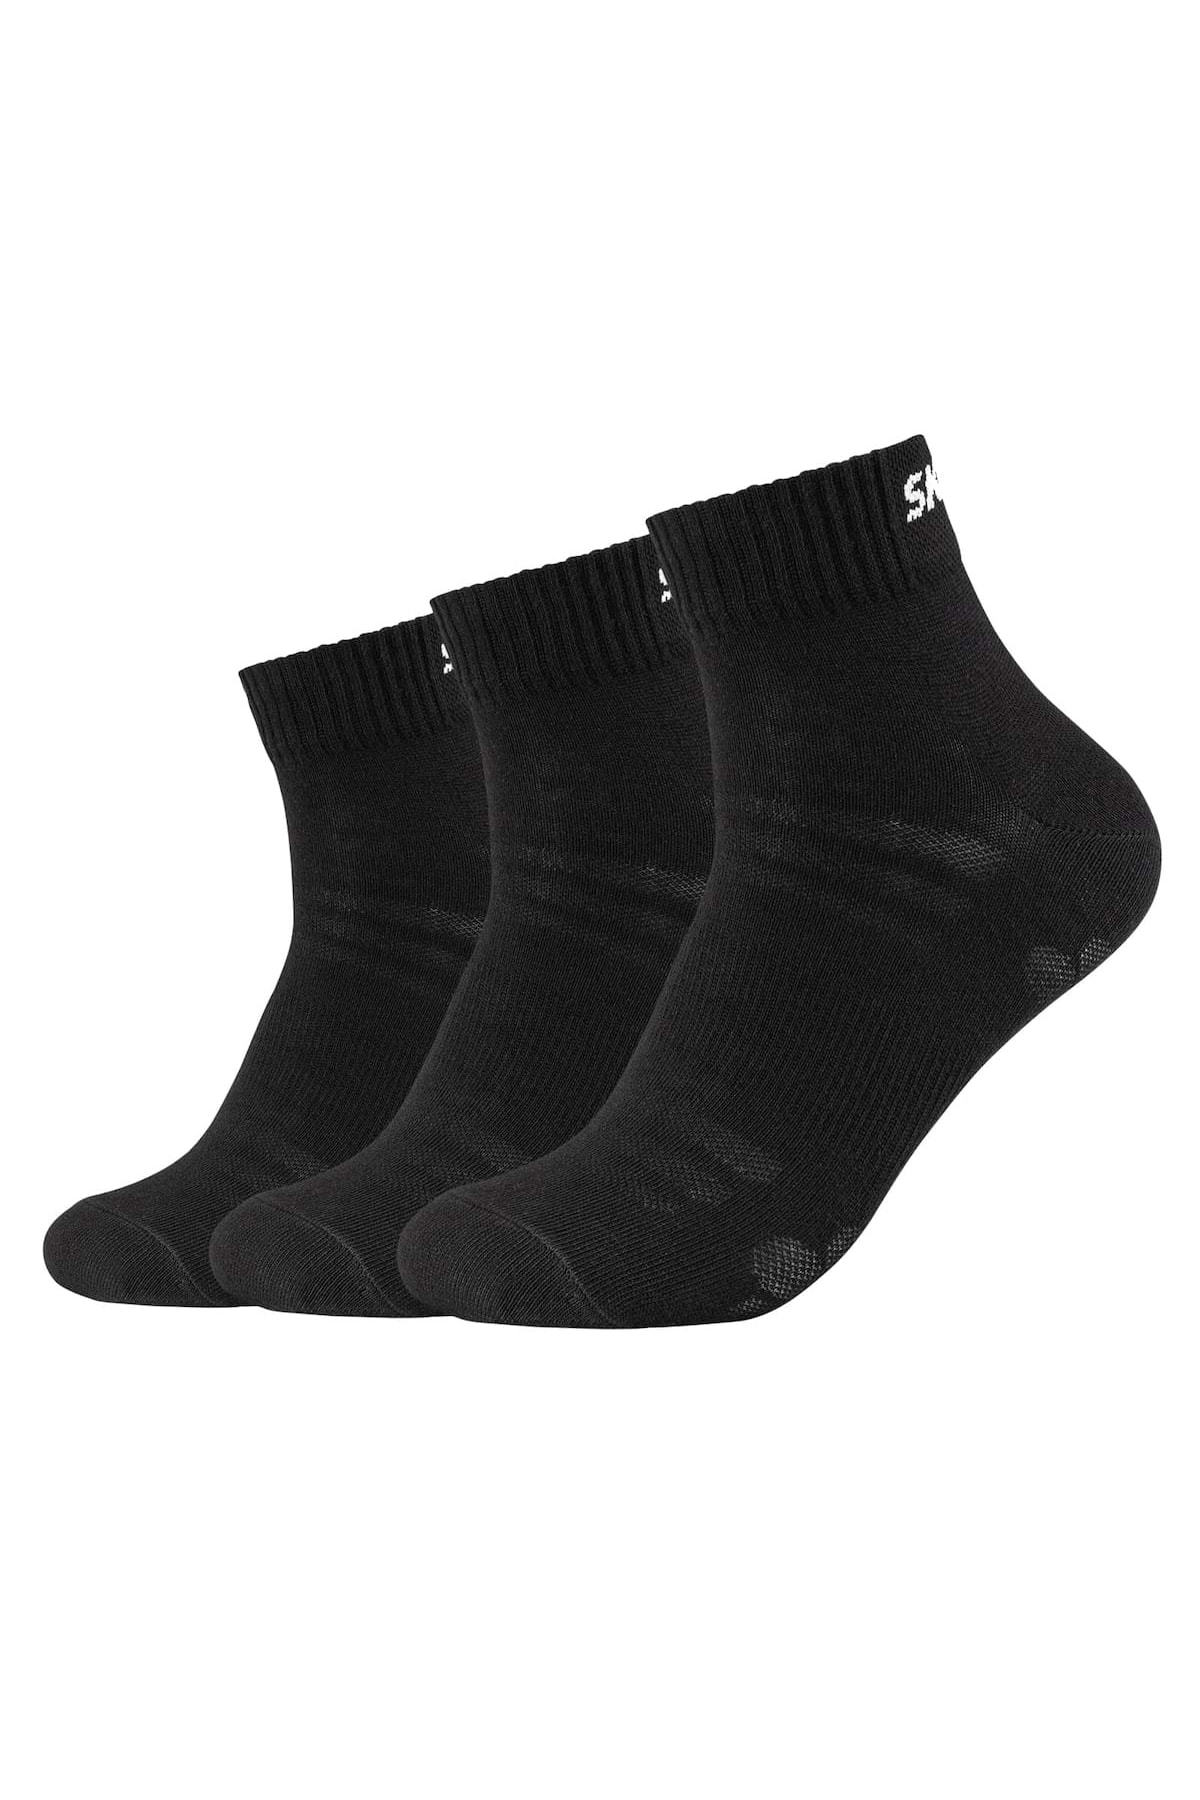 SKECHERS Socken Schwarz 3er-Pack Fast ausverkauft